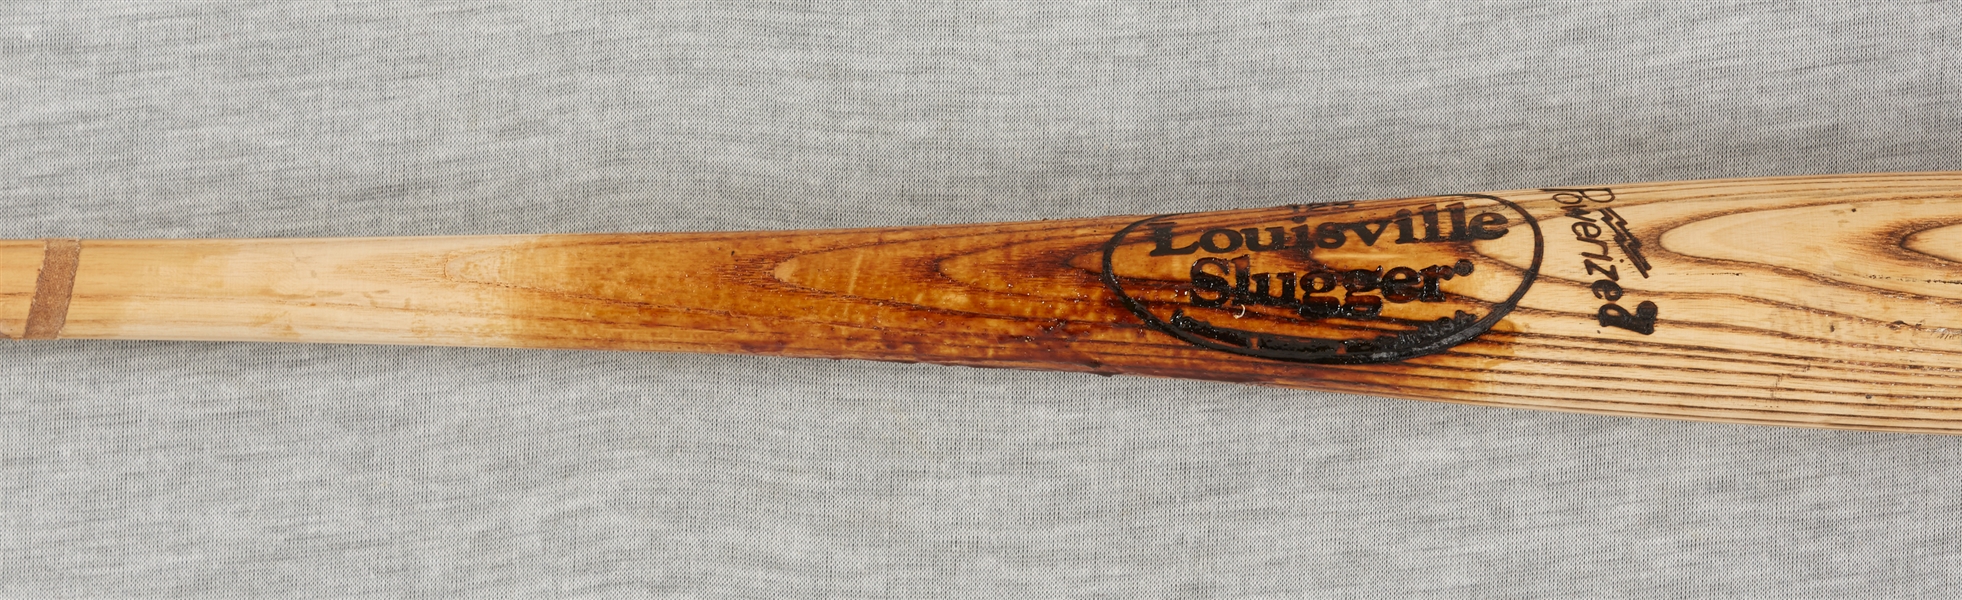 Jorge Posada 2011 Game-Used Louisville Slugger Bat (Steiner)